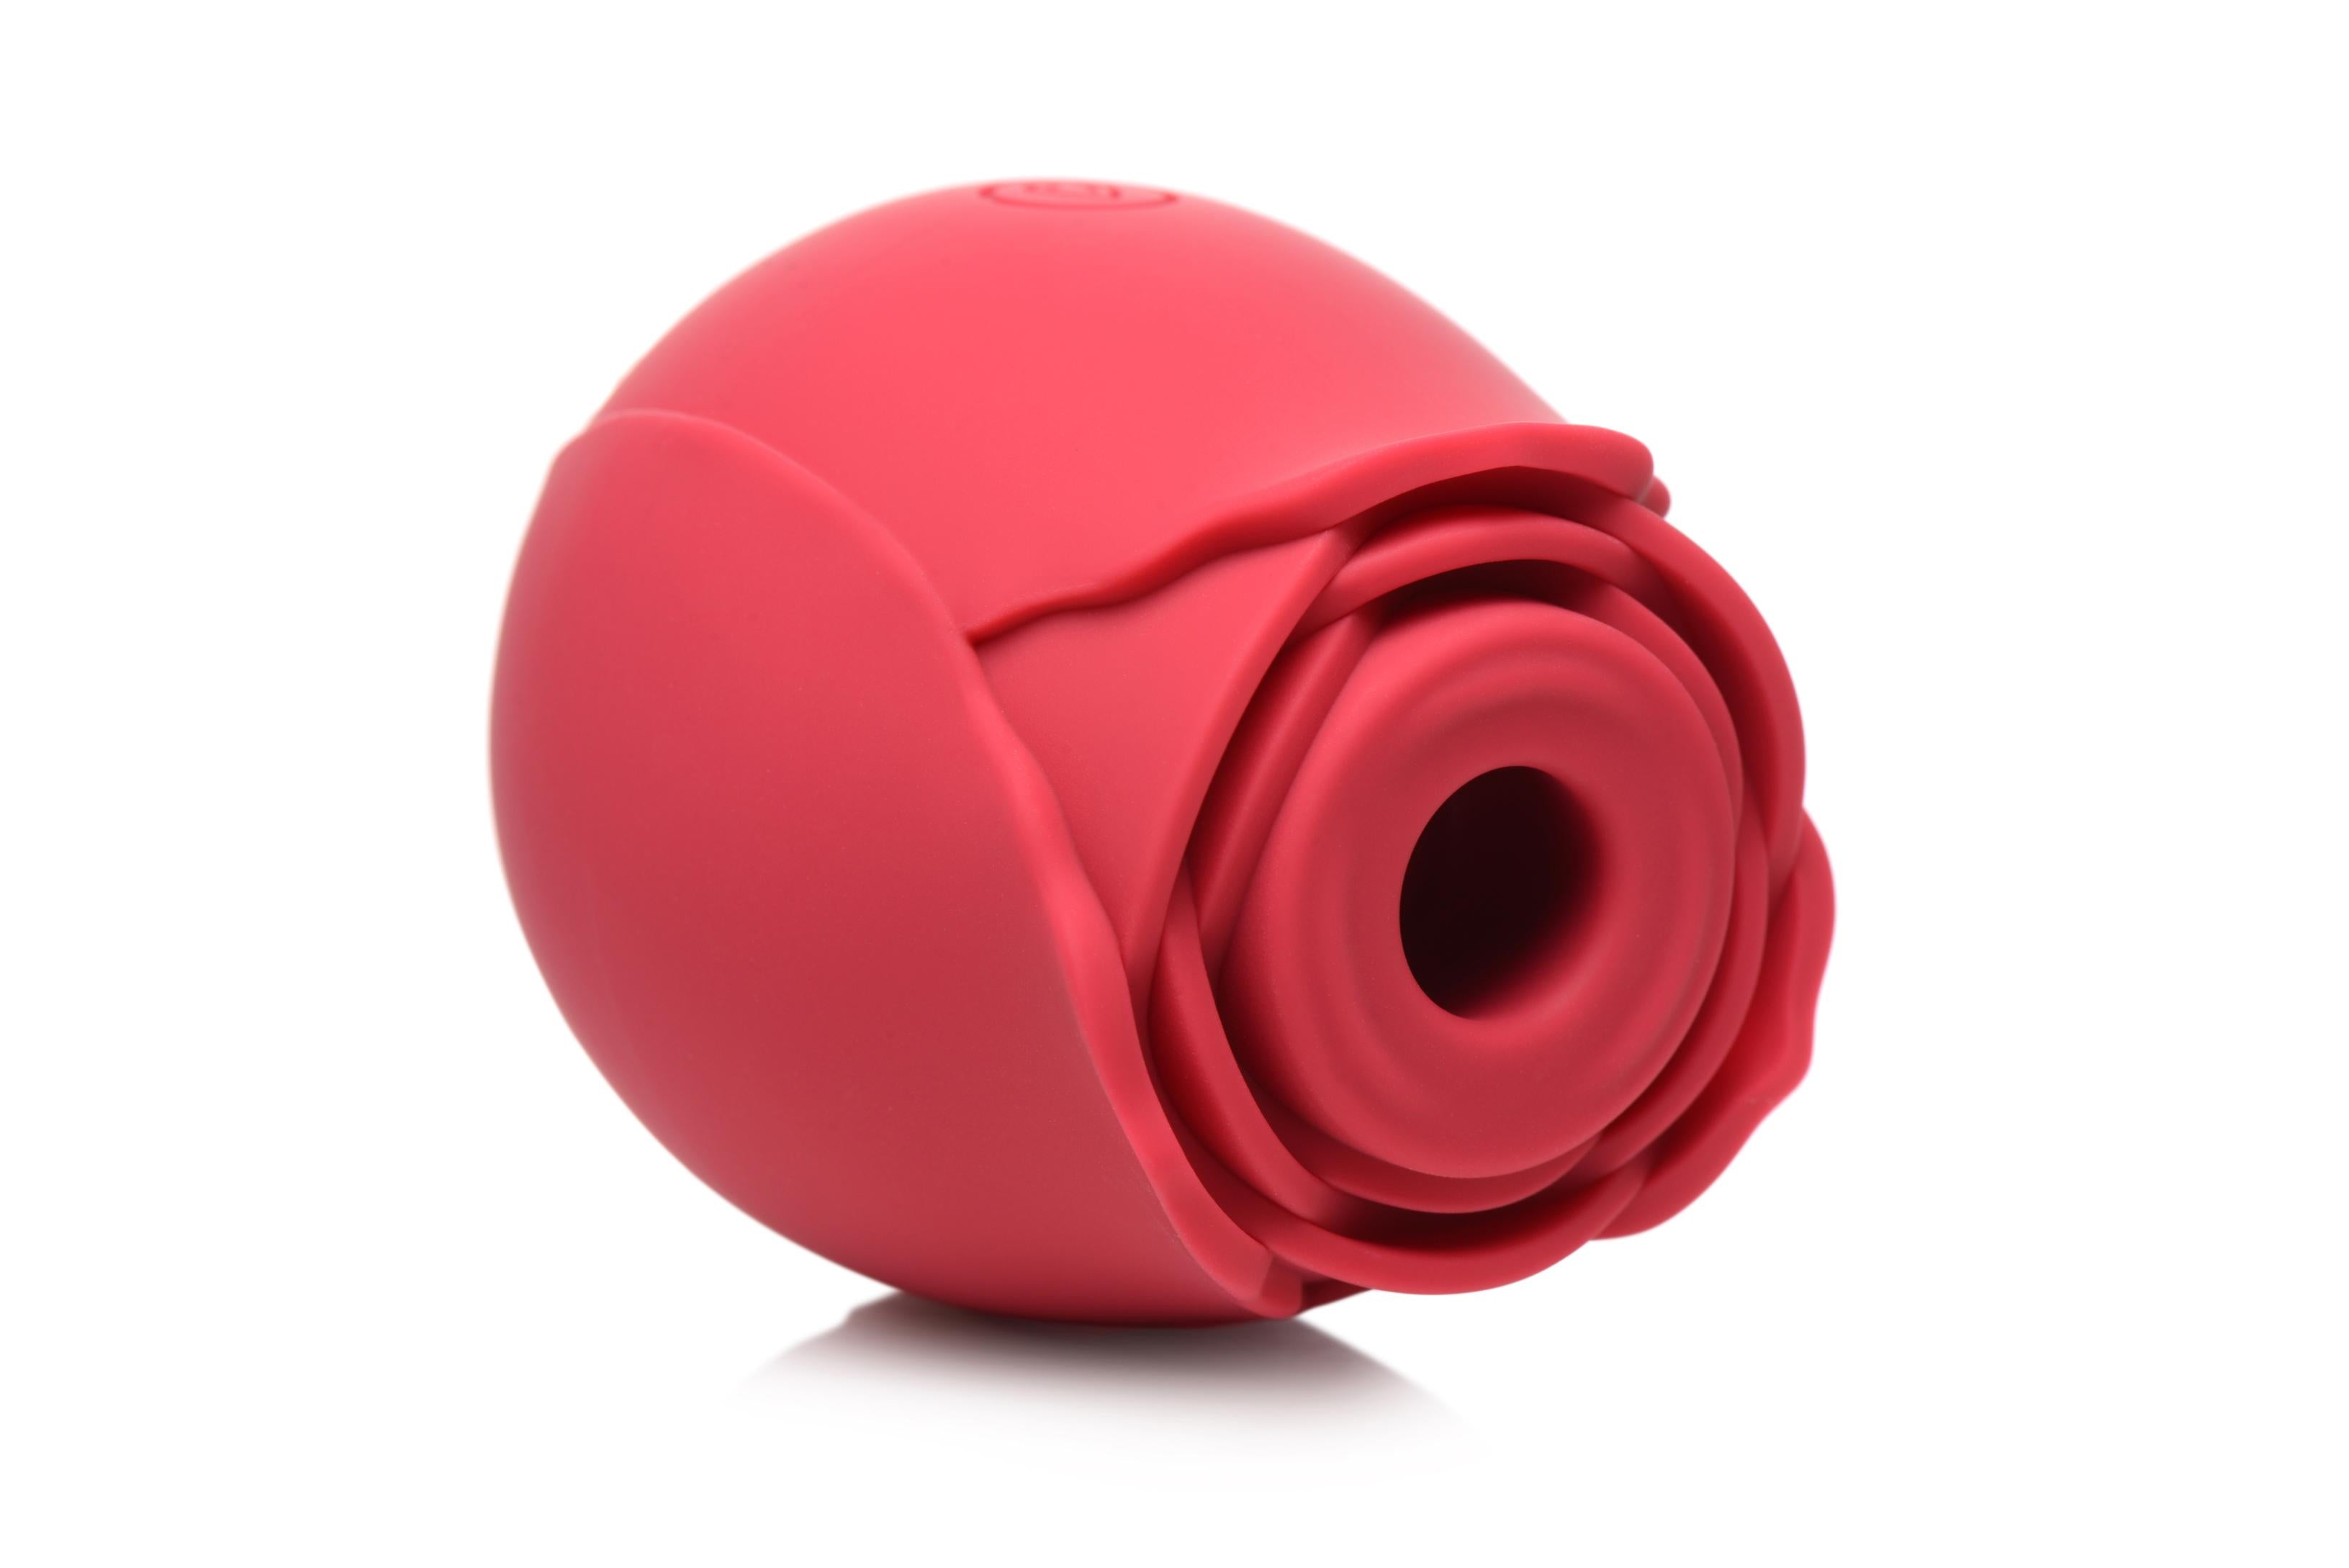 inmi Bloomgasm Wild Rose Clitoral Stimulator - Xr